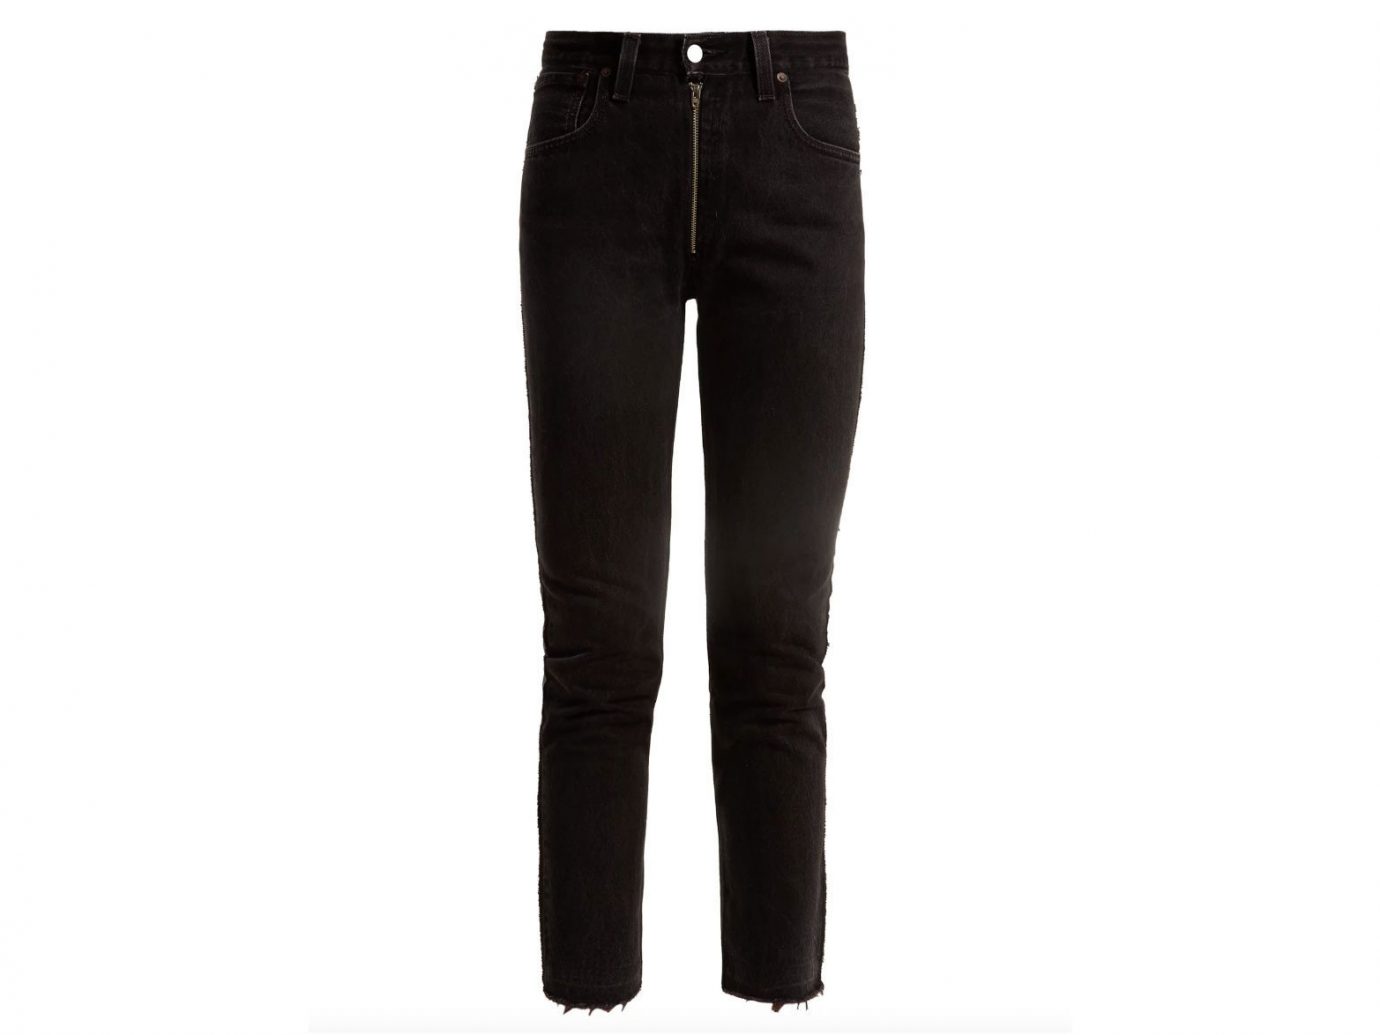 City NYC Style + Design Travel Shop clothing trouser suit jeans denim wearing trousers waist pocket active pants posing